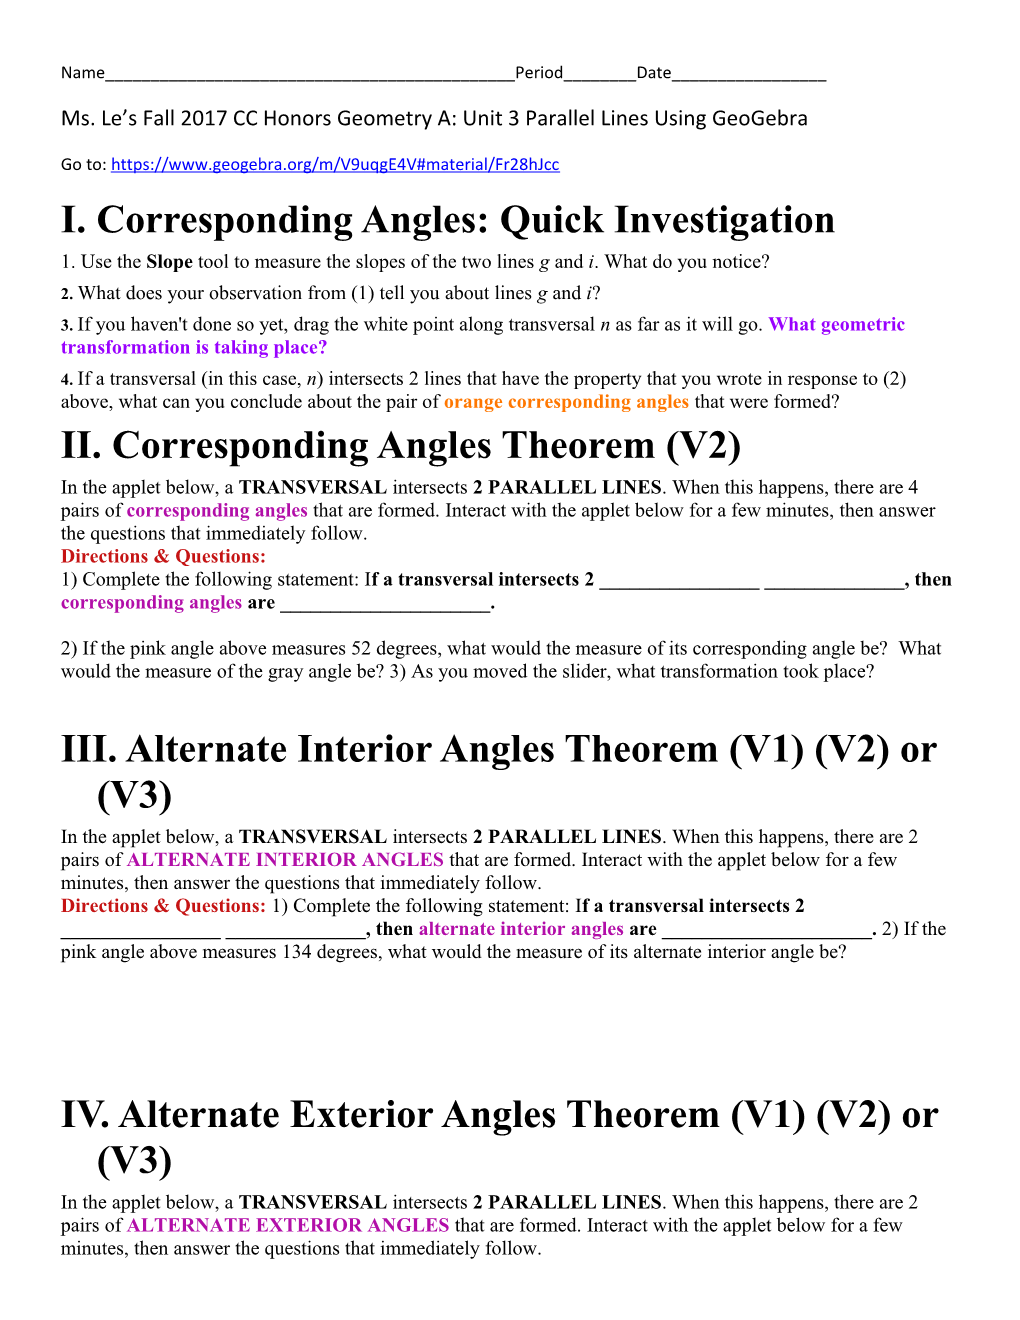 I. Corresponding Angles: Quick Investigation